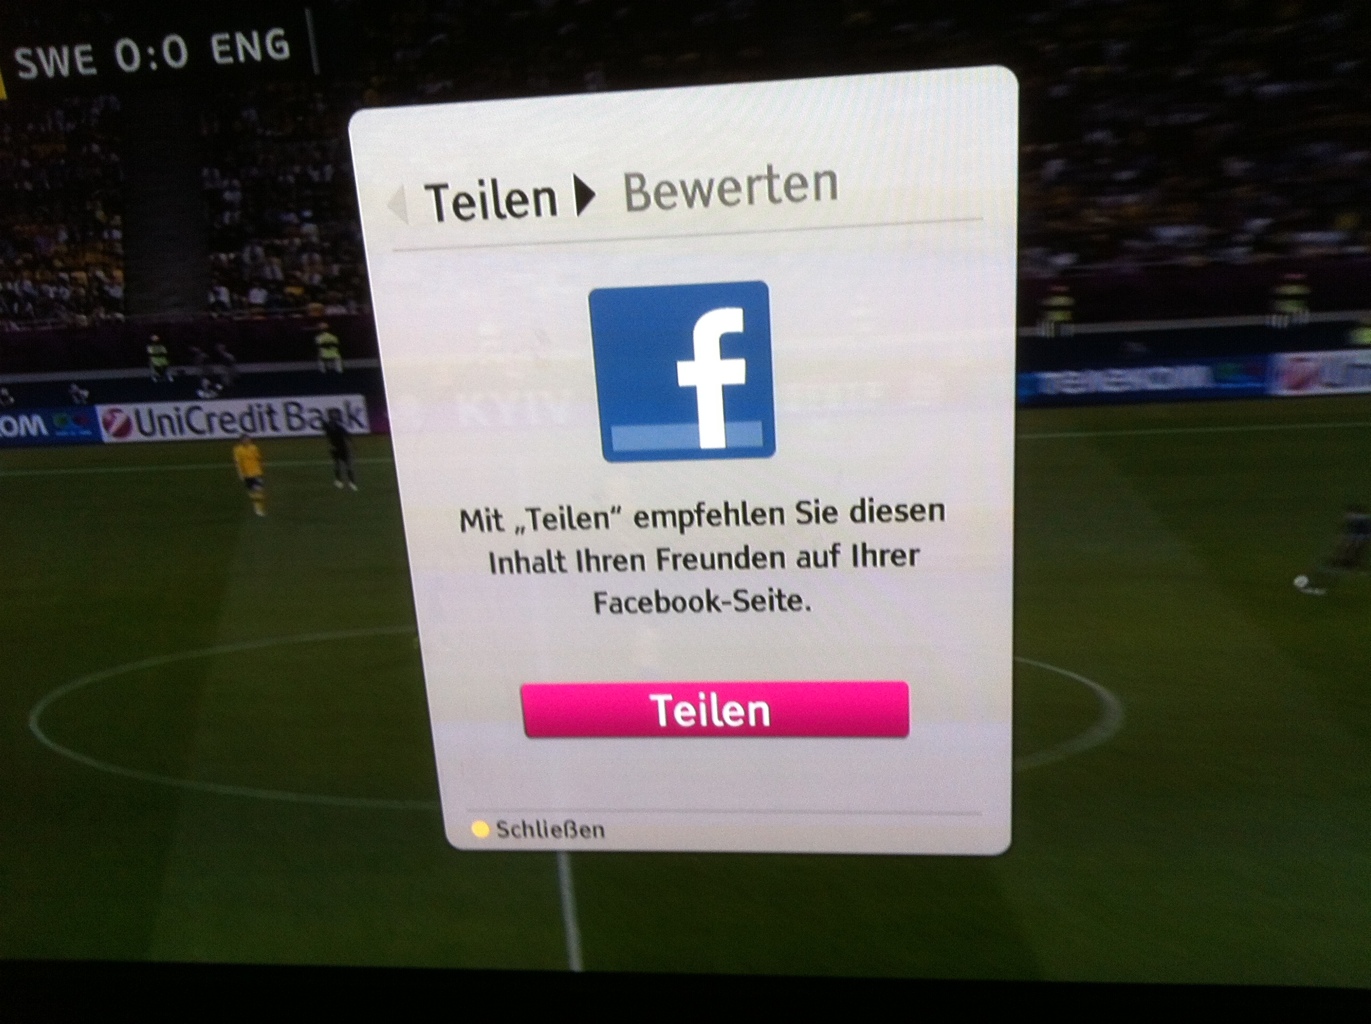 Telekom Entertain: Bei Facebook teilen